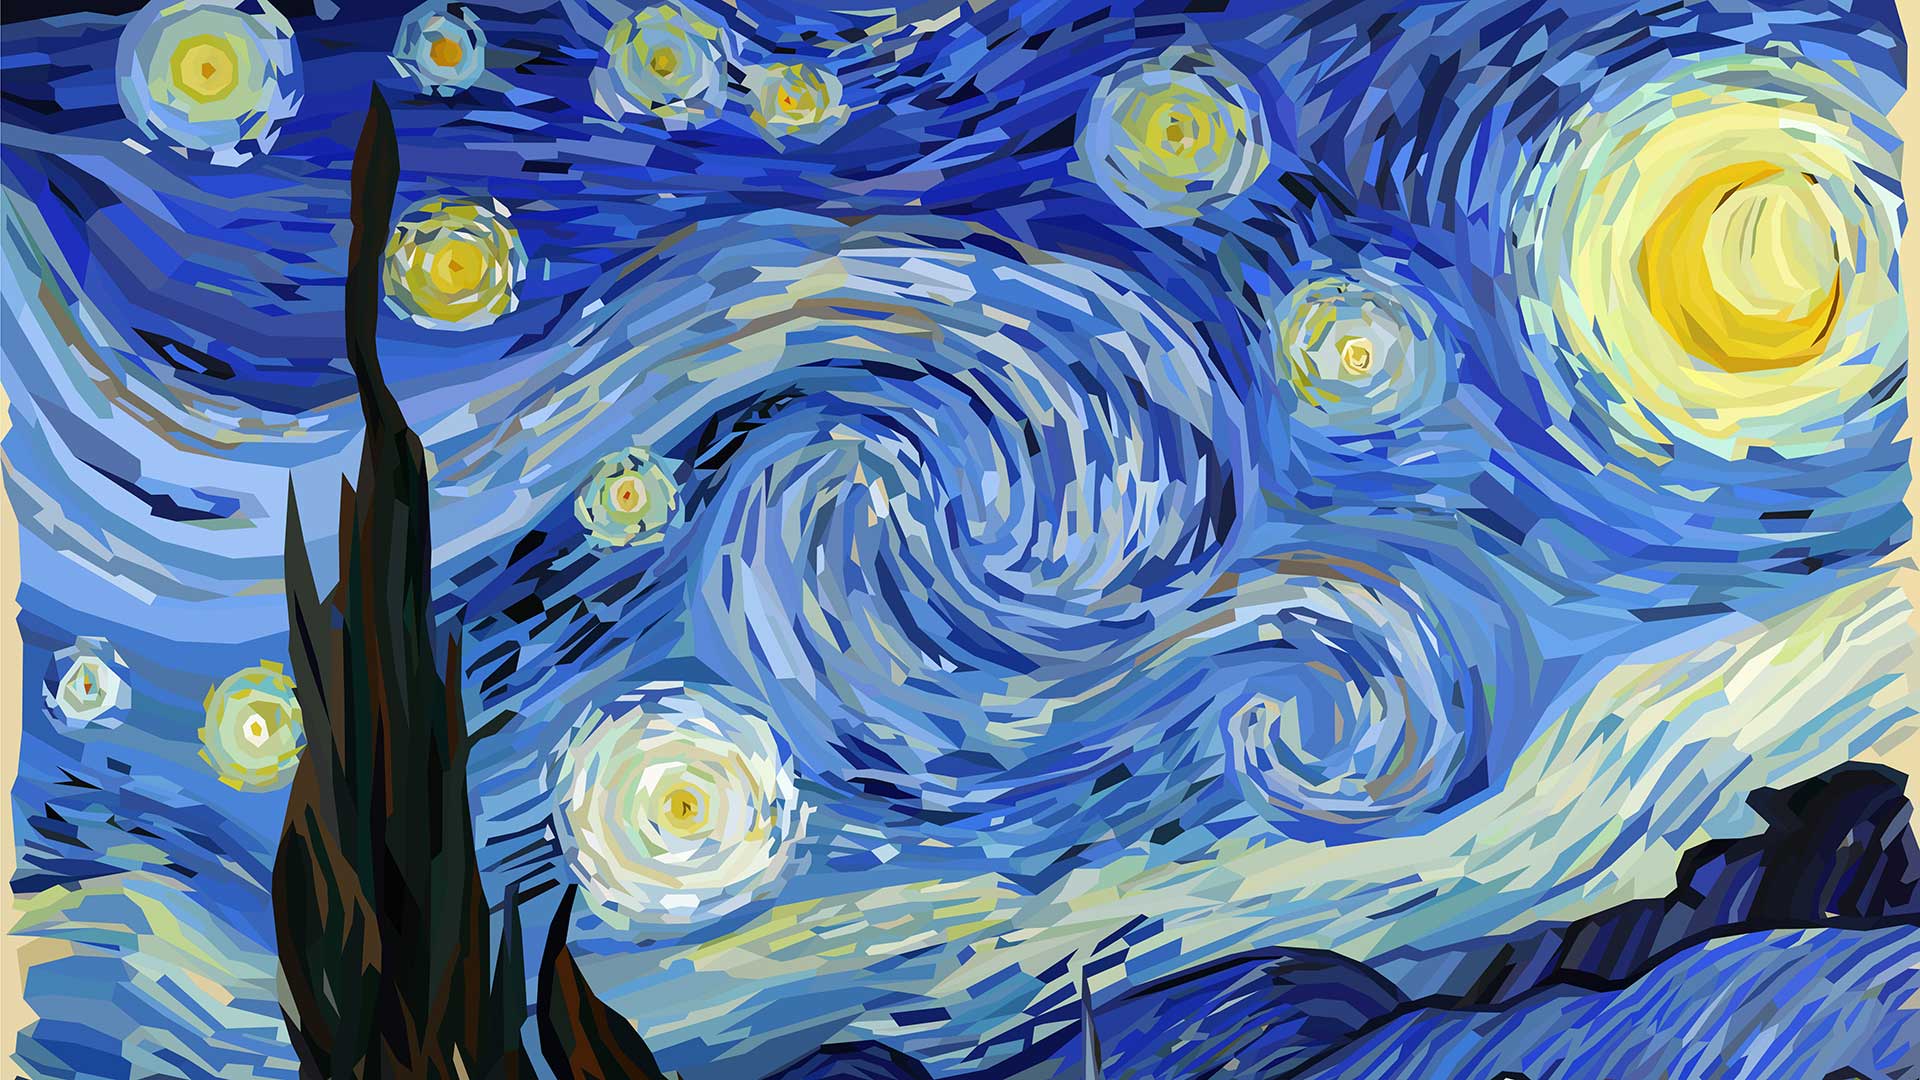 Starry Night by Vincent van Gogh painting digitalised